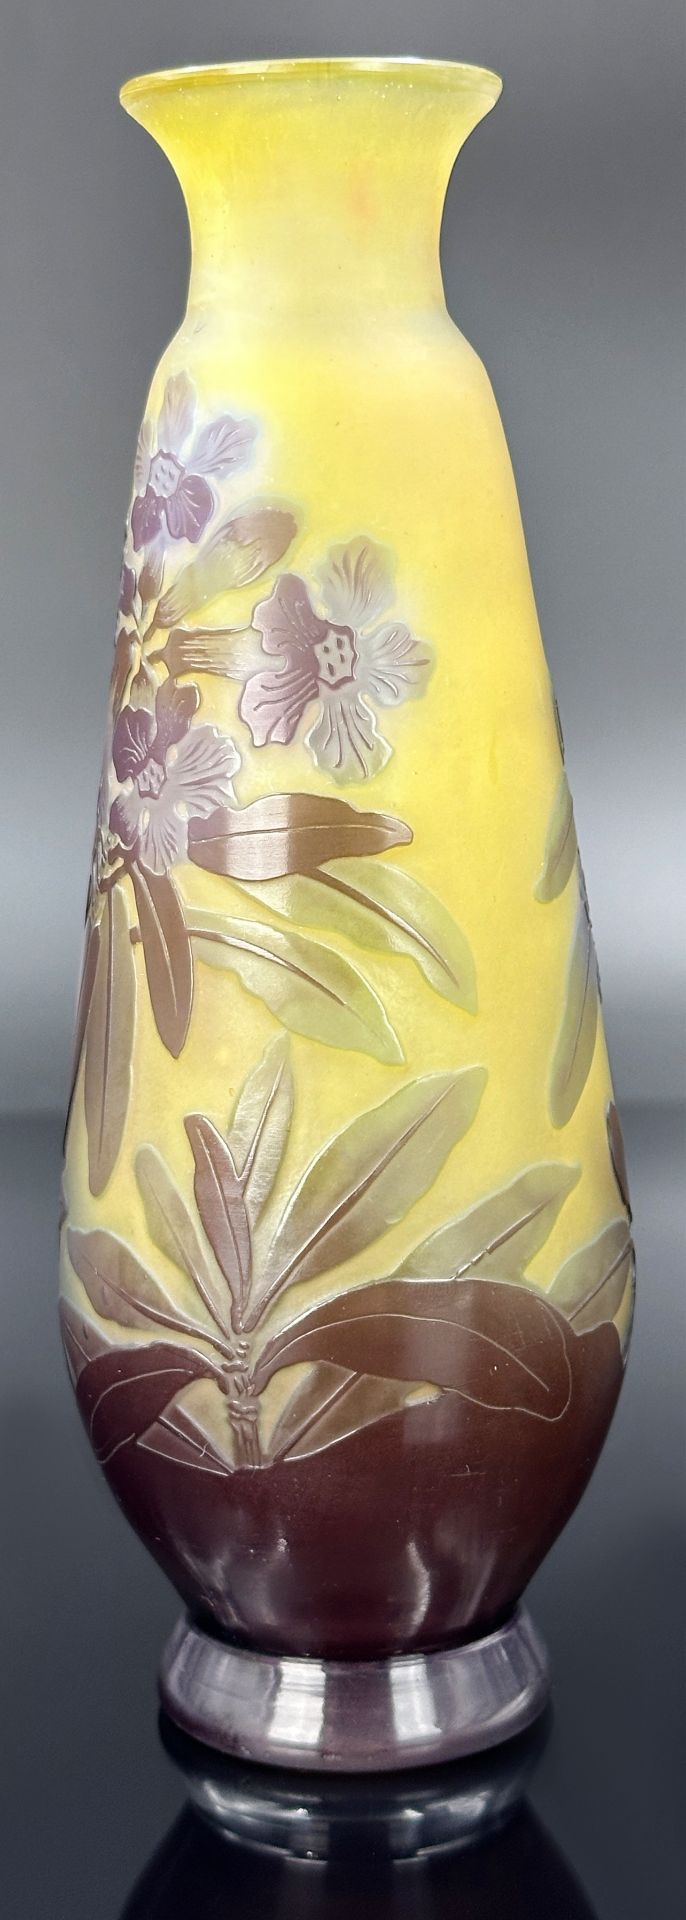 Small vase. Emile GALLÉ (1846 - 1904). Around 1900. - Image 3 of 10